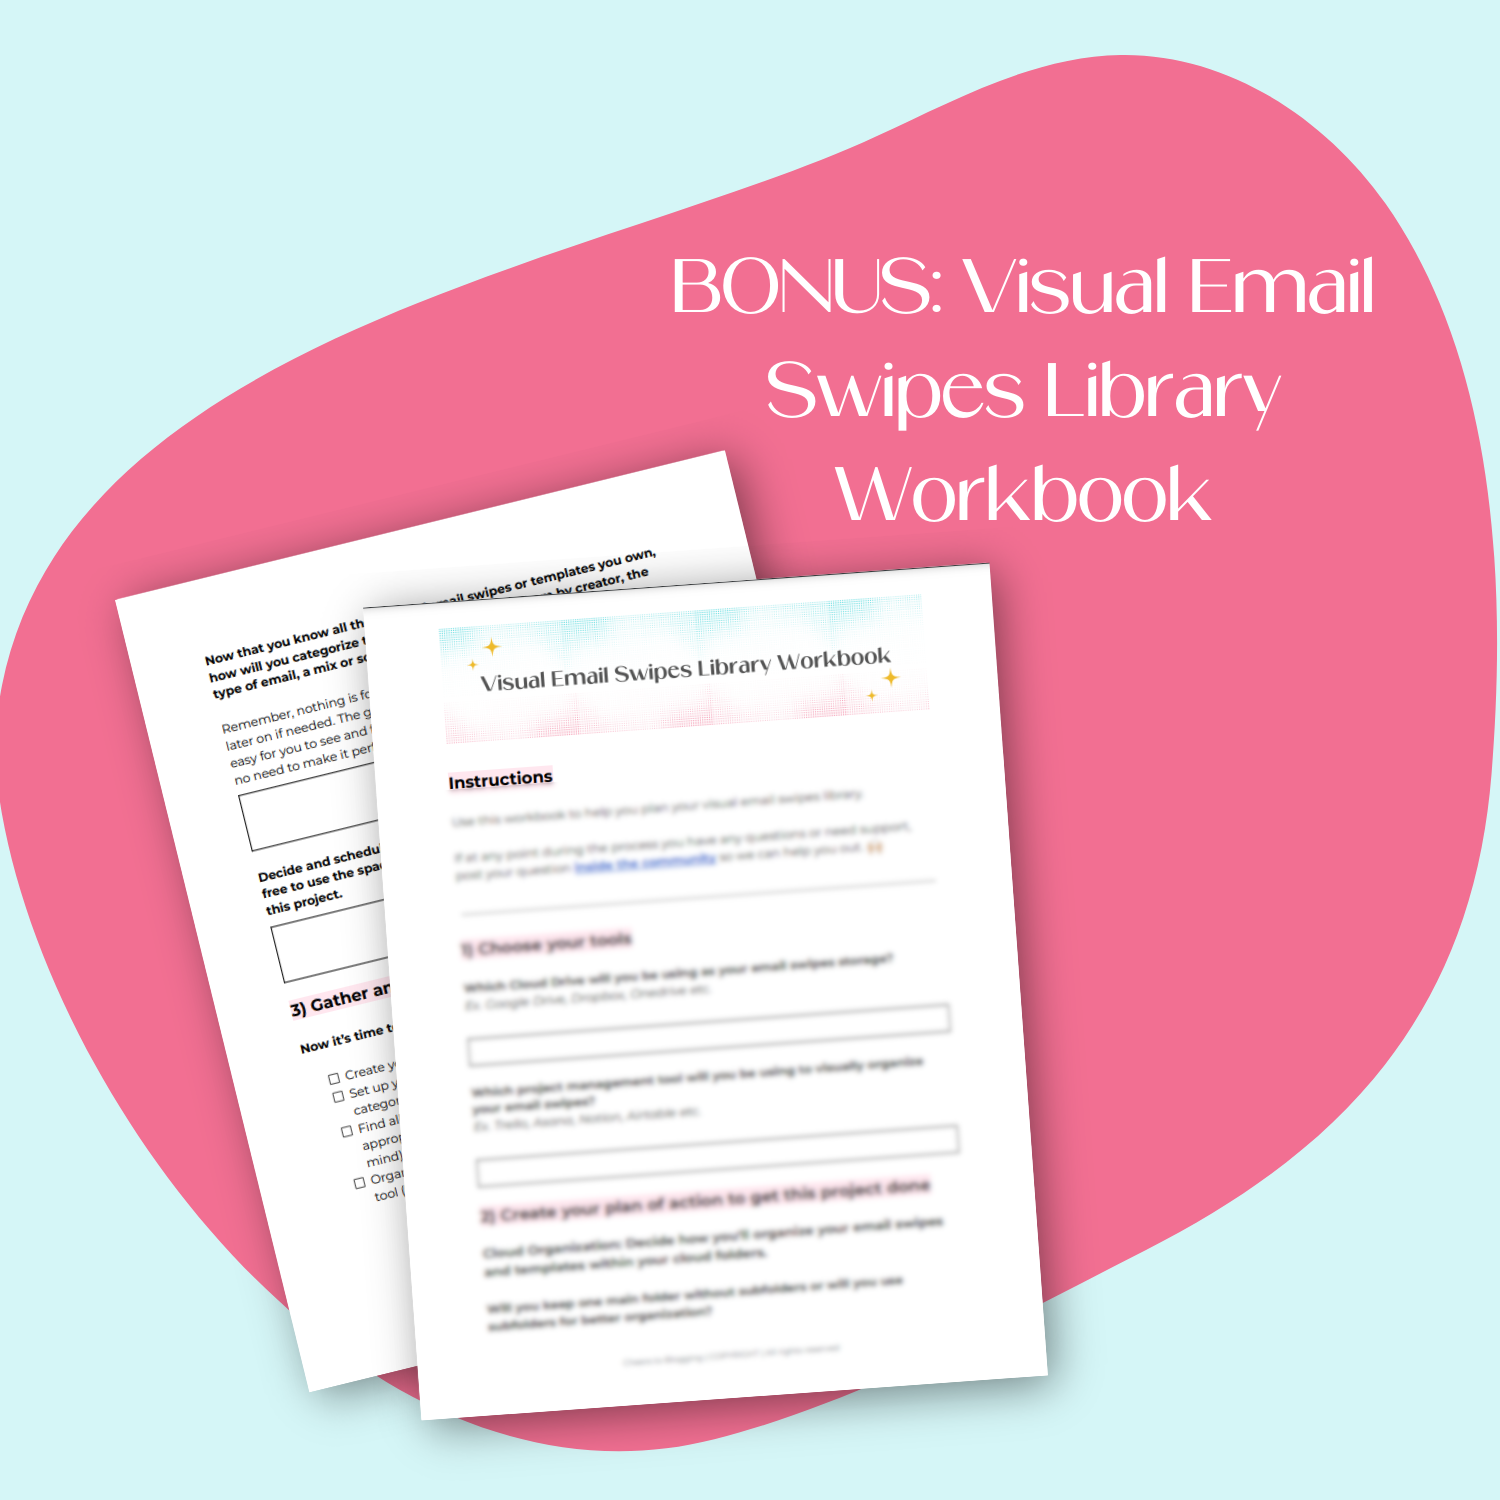 A document mockup displaying the bonus, Visual Email Swipes Library Workbook.